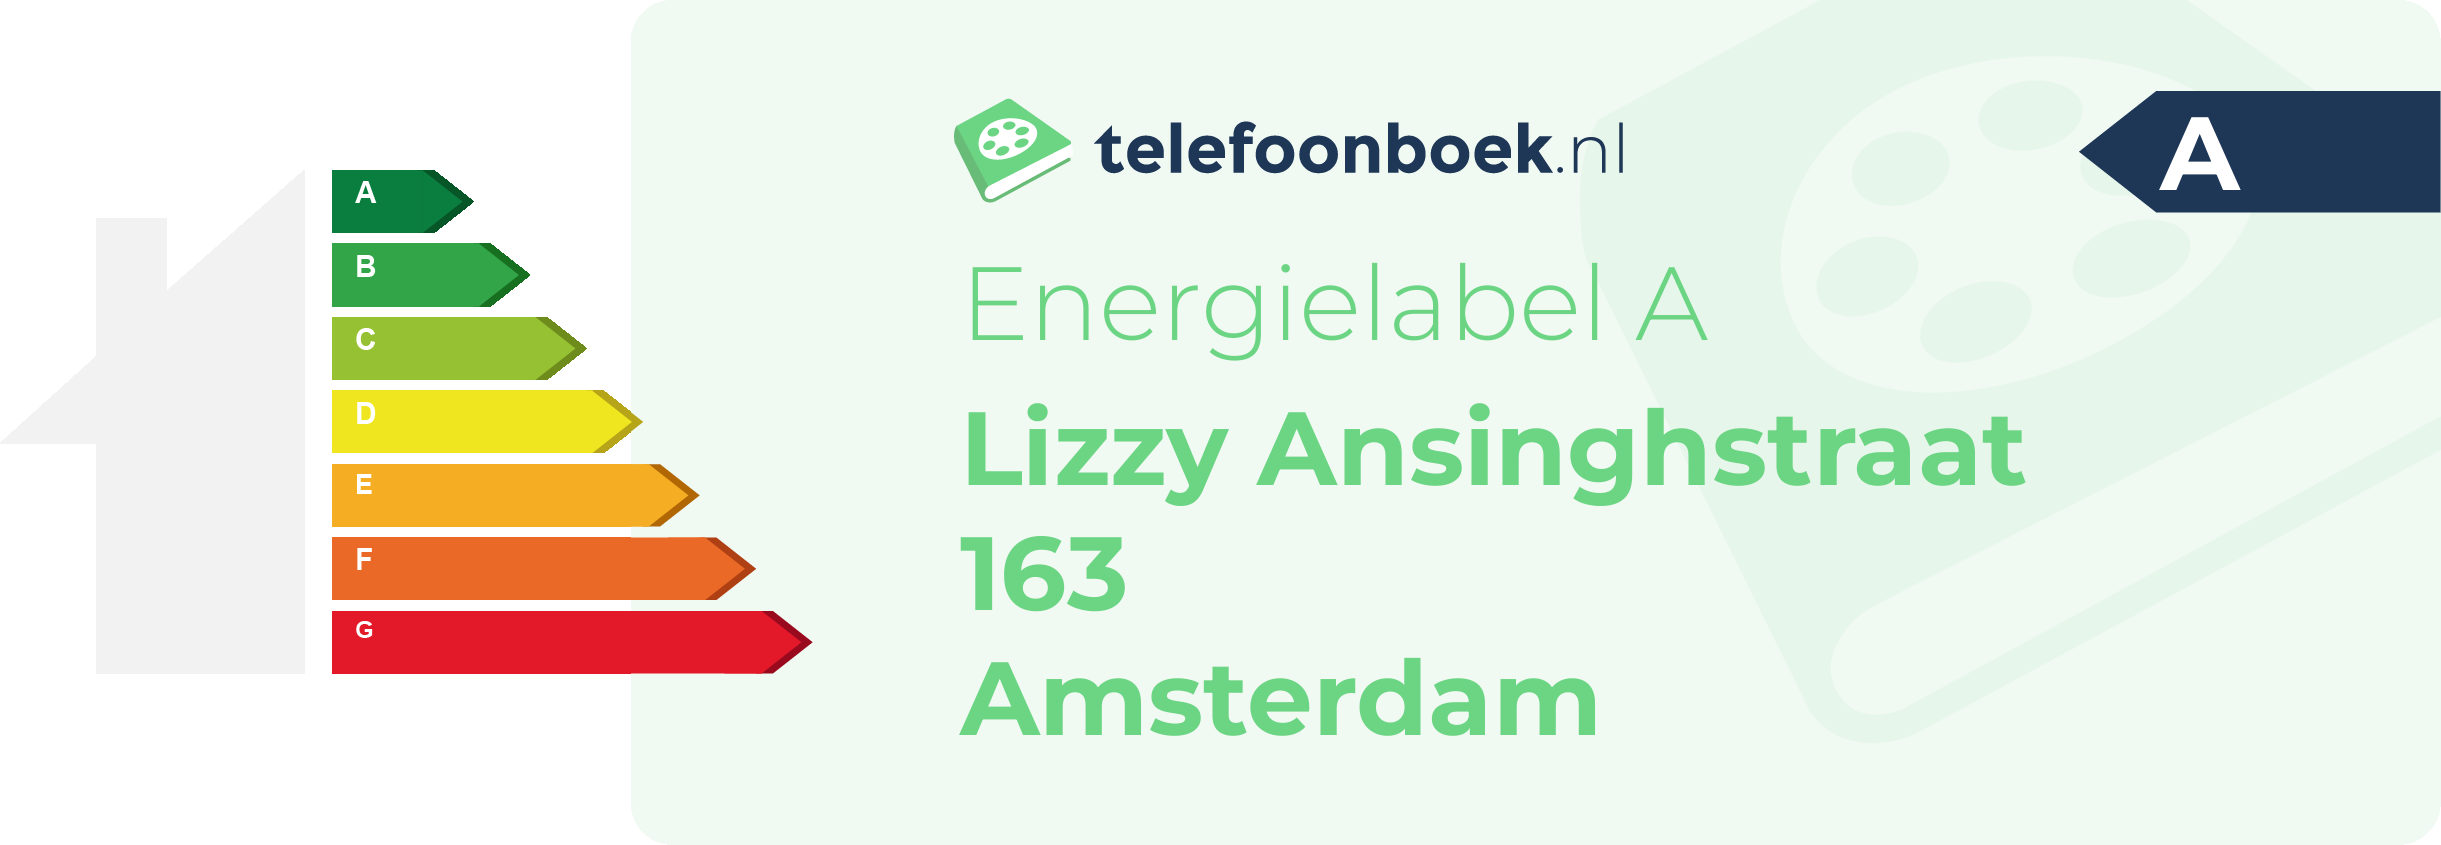 Energielabel Lizzy Ansinghstraat 163 Amsterdam